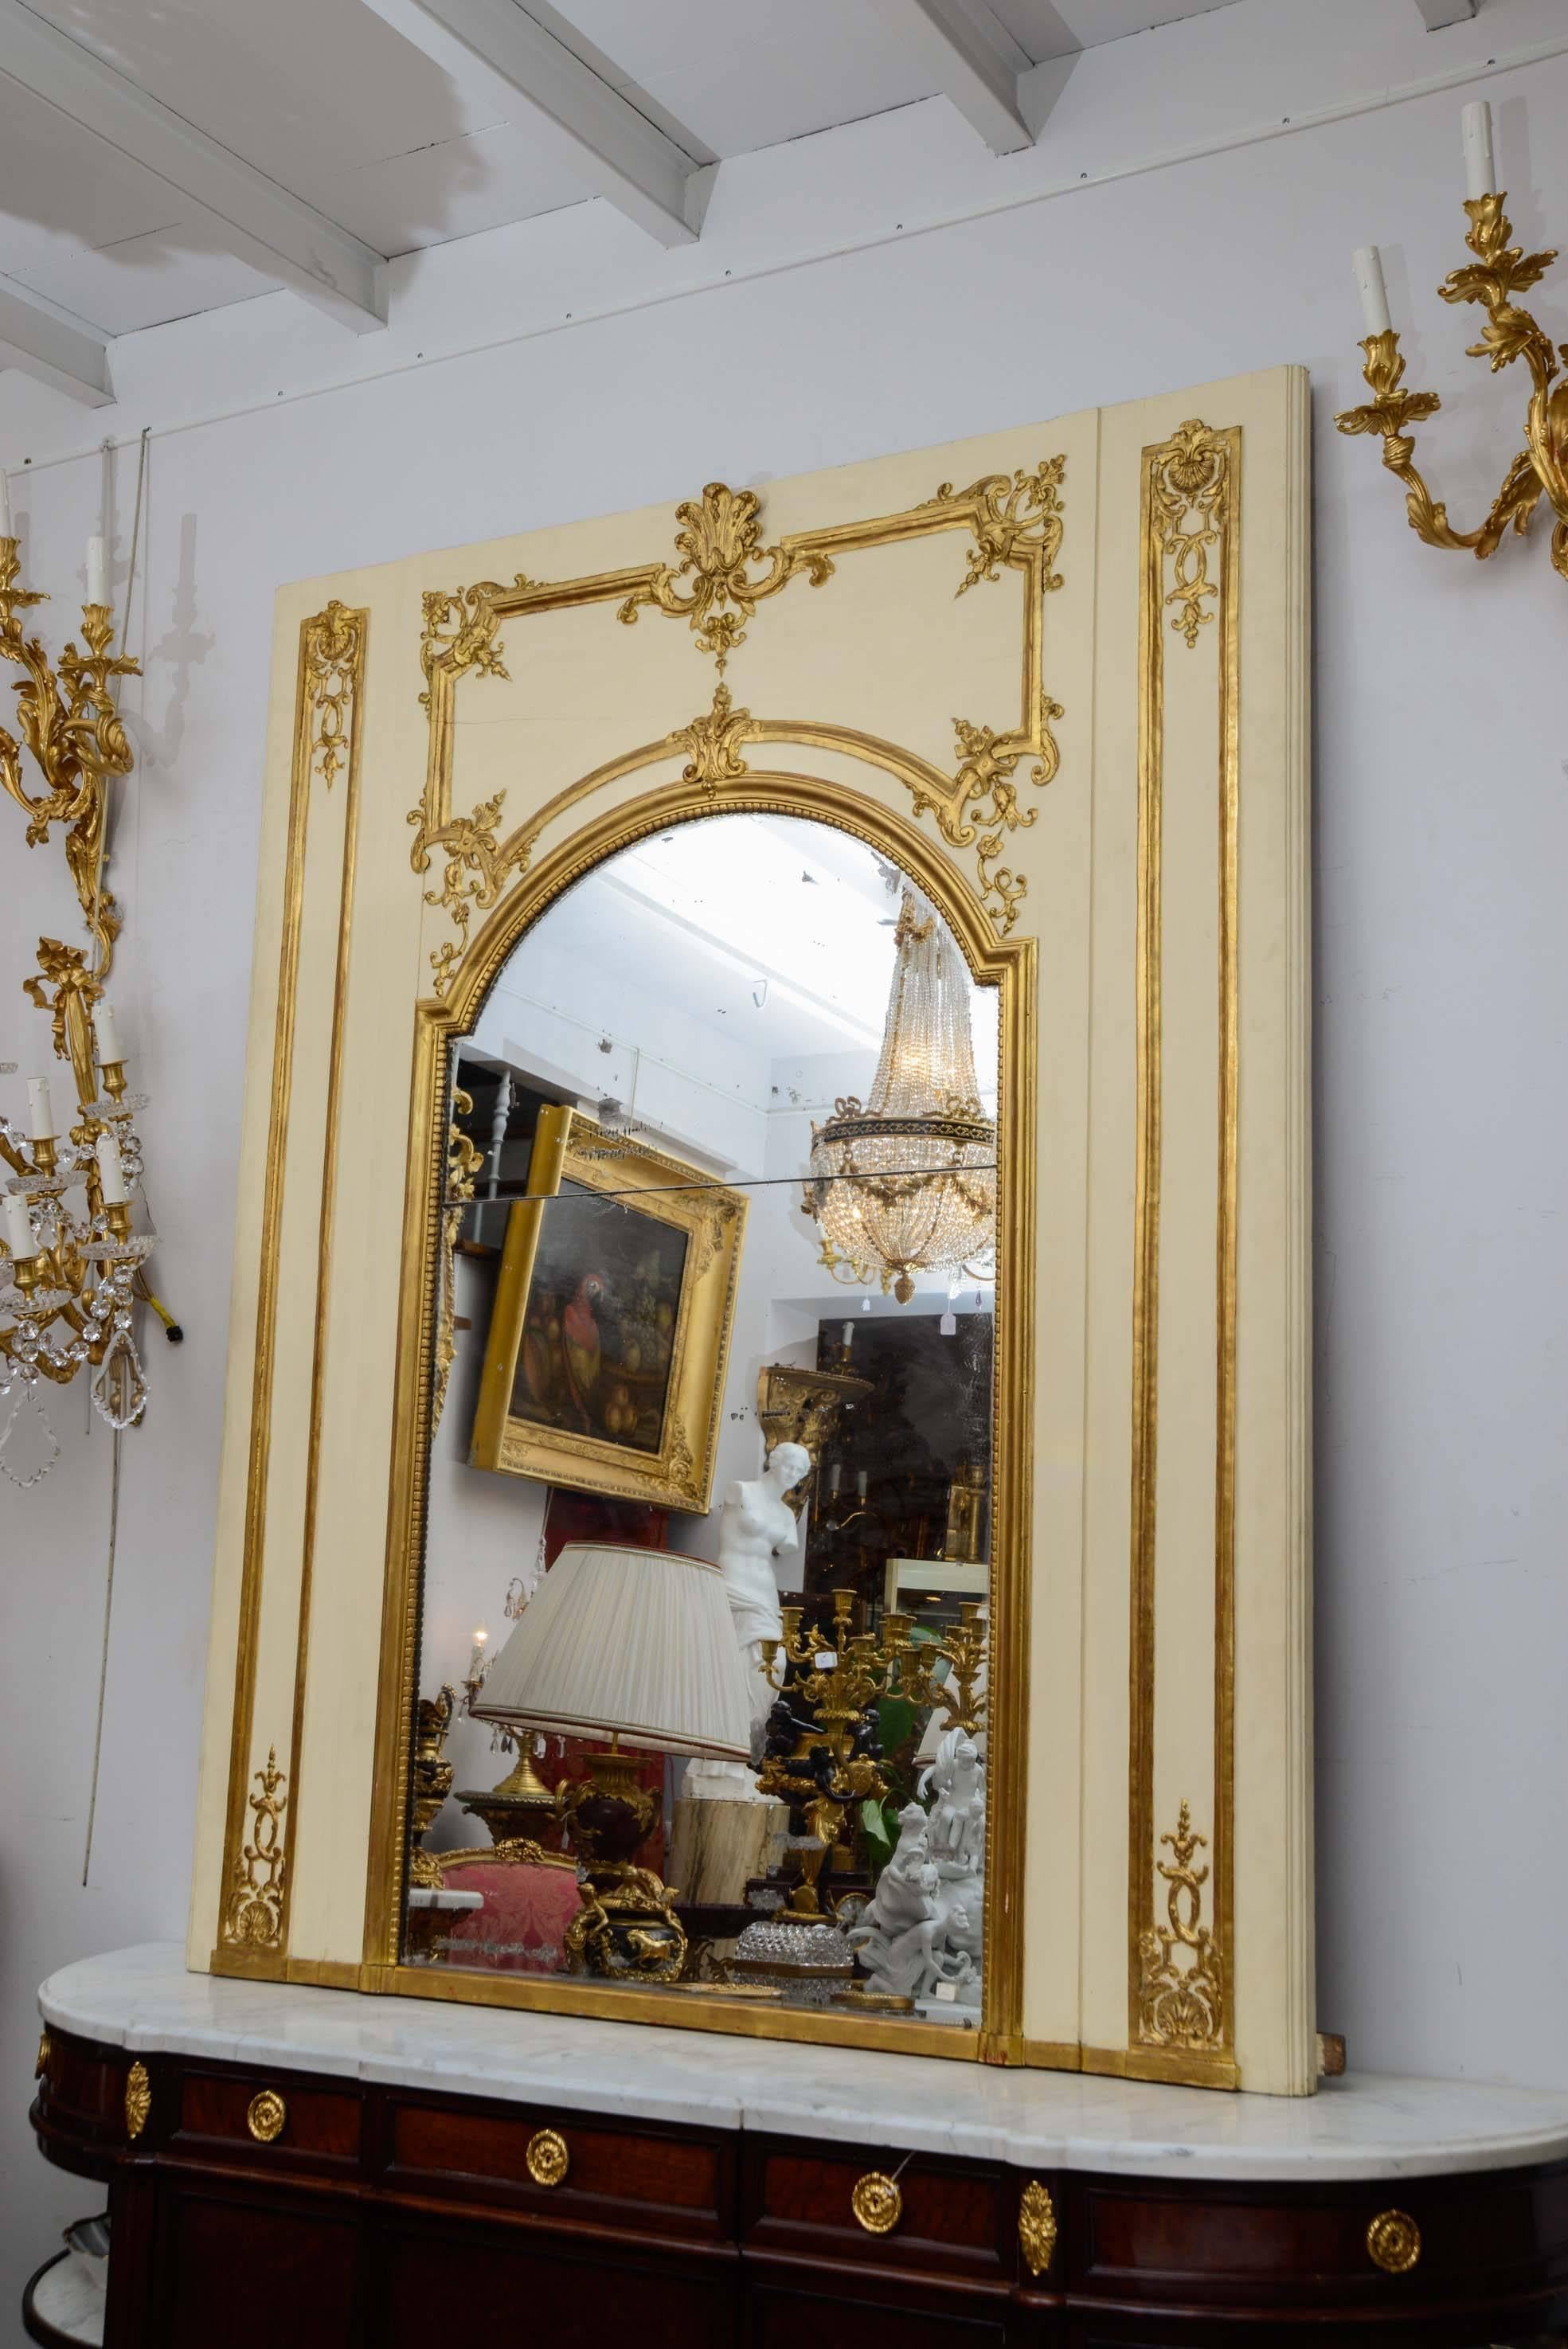 Gorgeous Regence Louis XV mirror painted and gilded wood.
Original mercury mirror.